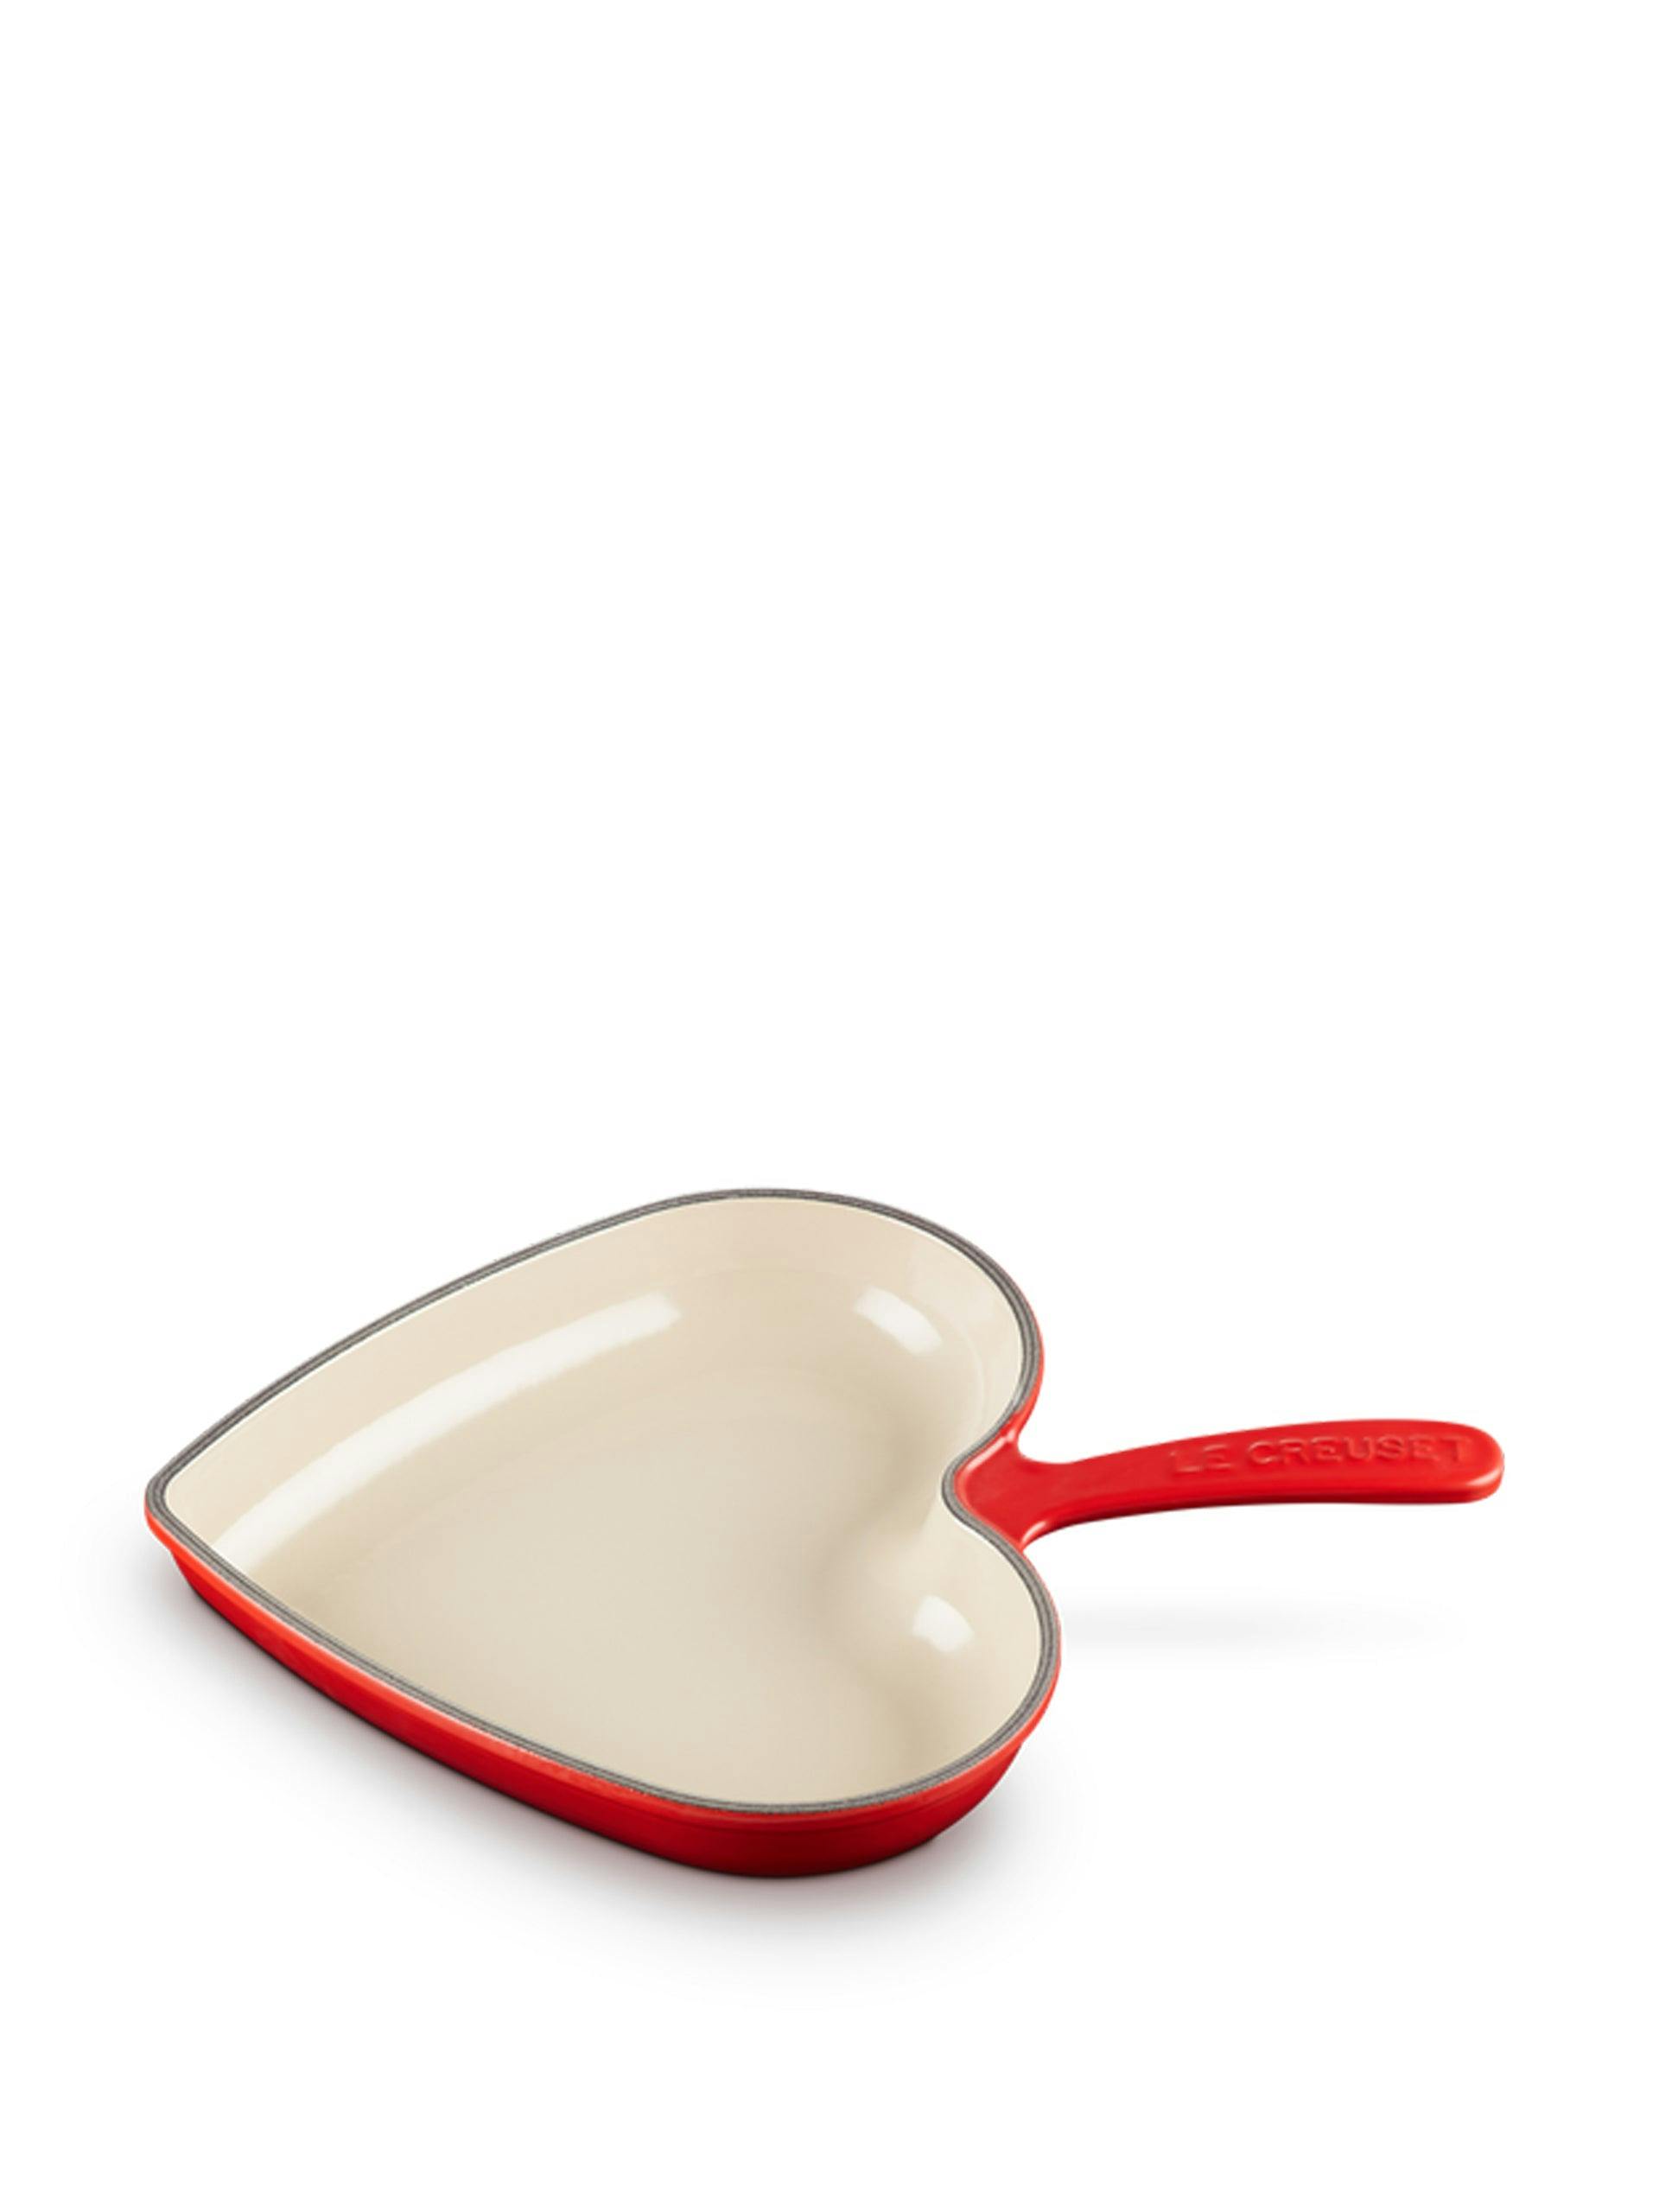 Cast iron heart-shaped skillet